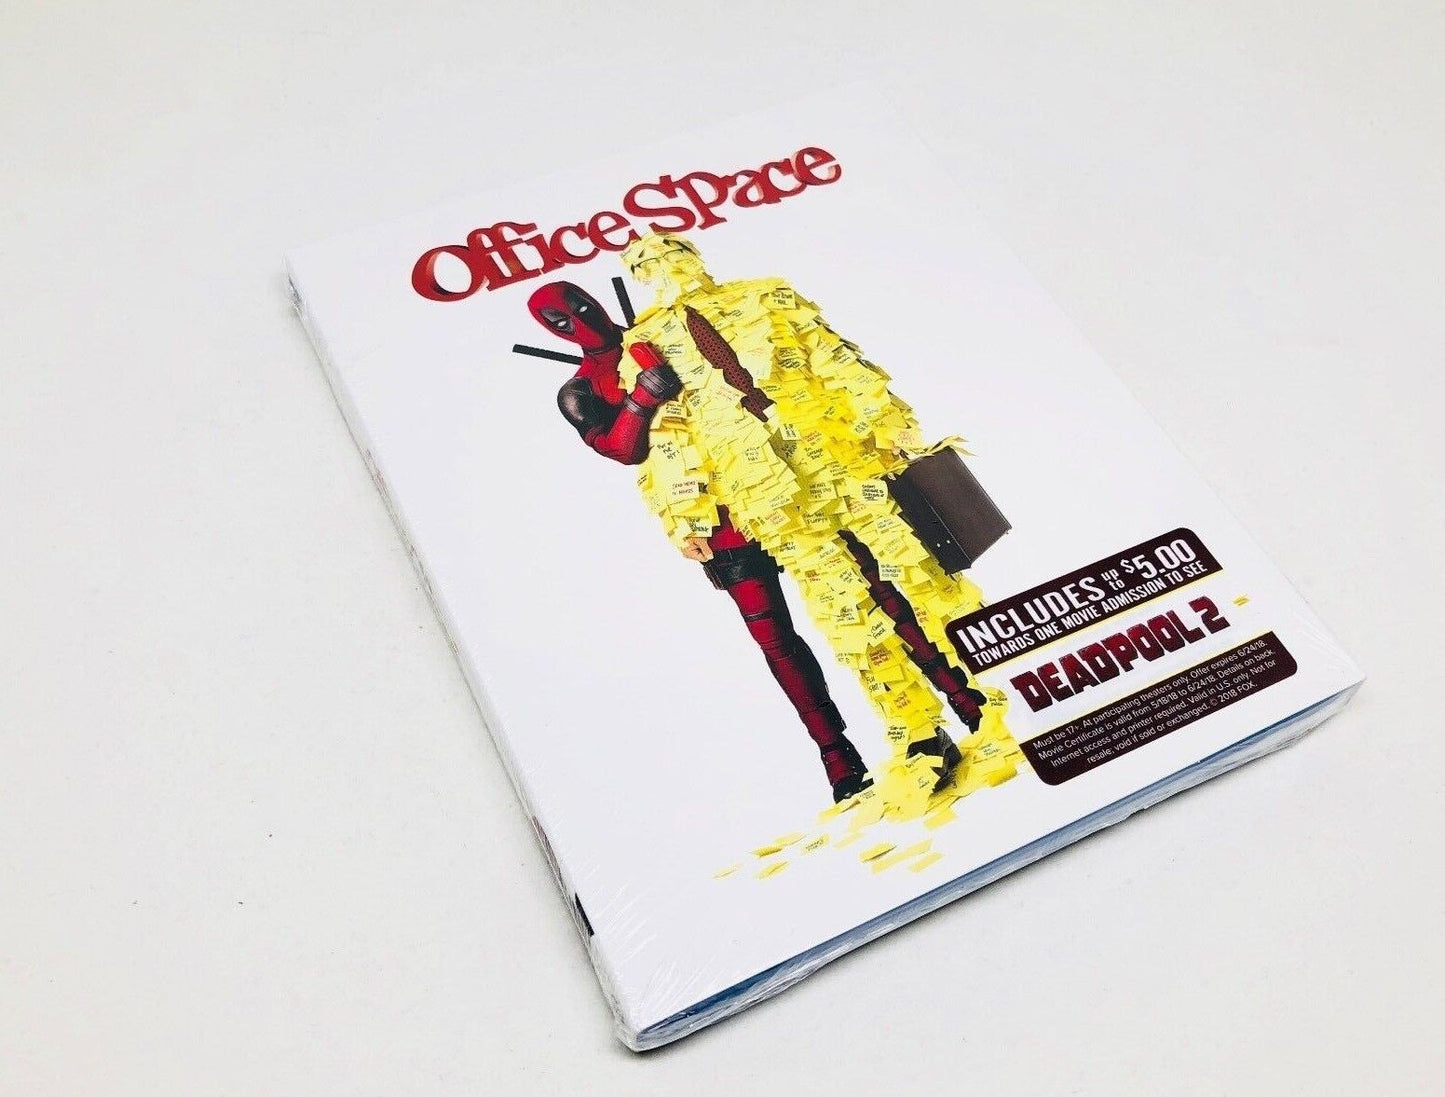 Office Space Blu-Ray - Deadpool Photobomb Walmart Exclusive & Movie Cash